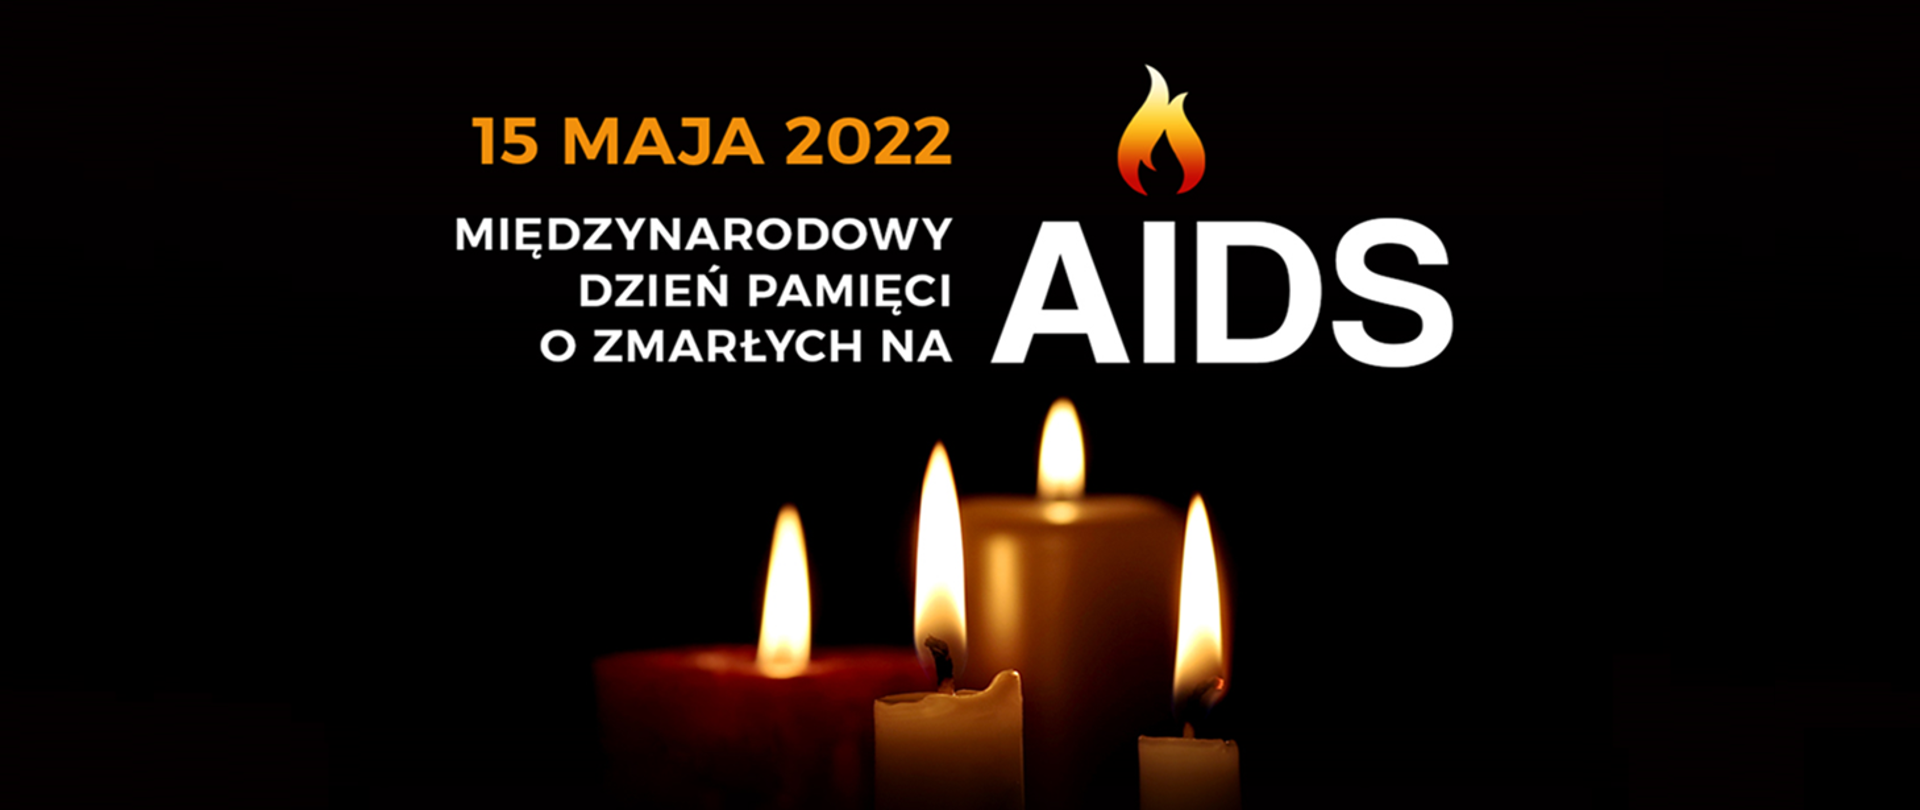 Dzień pamięci AIDS 15 maja 2022